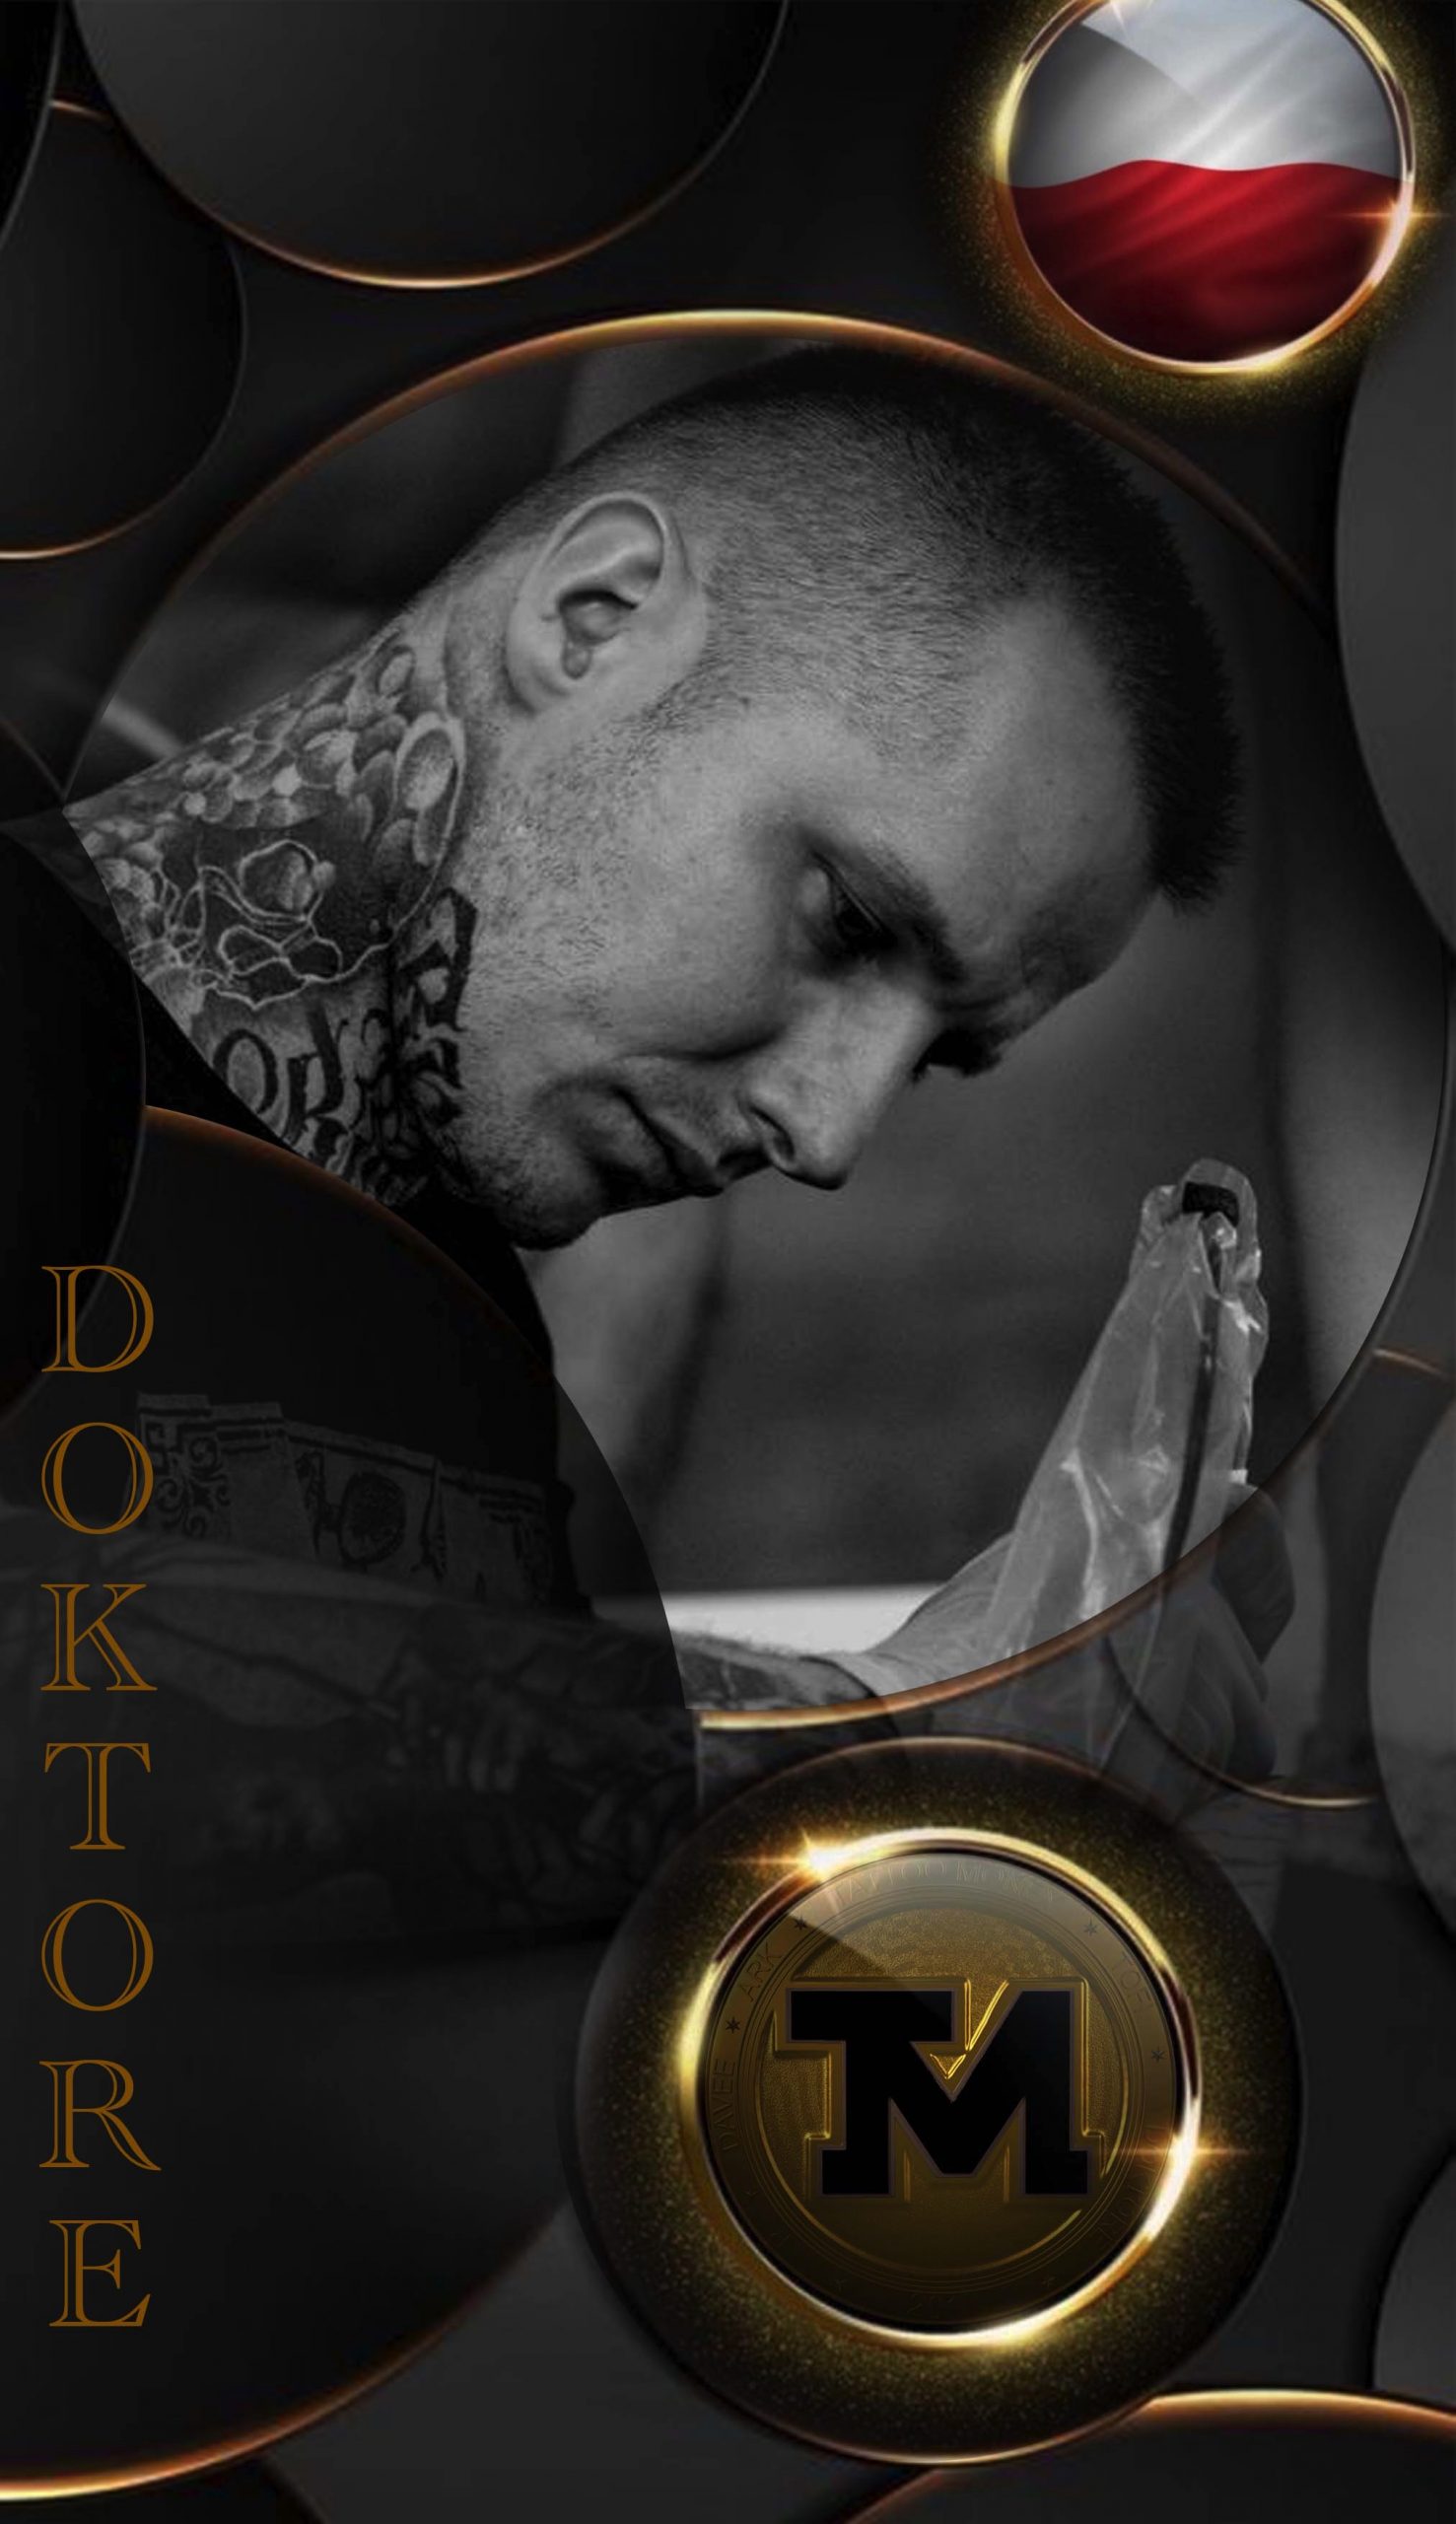 Darek DOKTORE Doktór - Owner and tattoo artist at Machinarium Tattoo & Art Gallery - Katowice (Toruń)